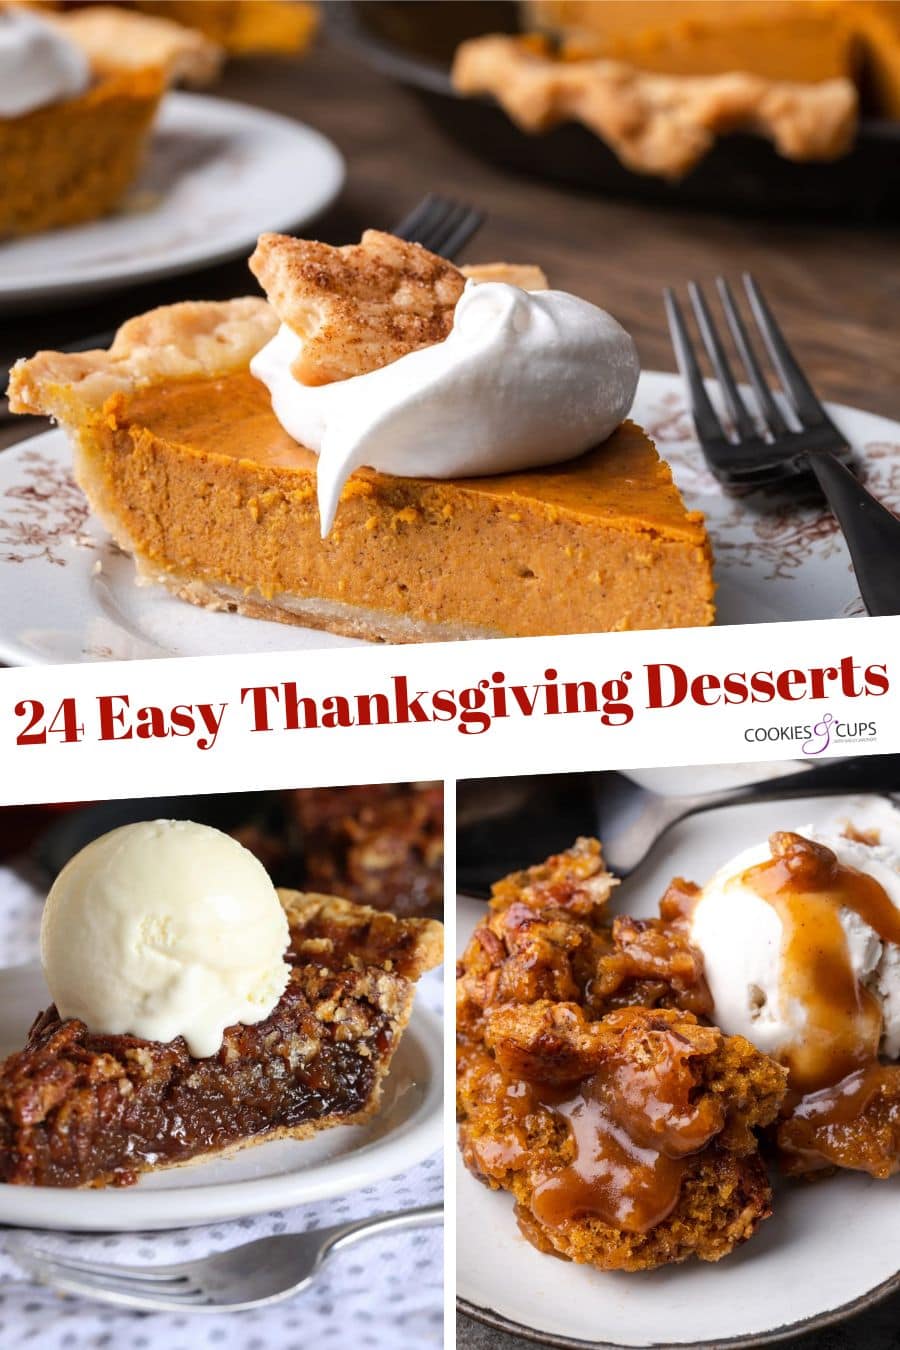 24 of the BEST Thanksgiving Dessert Recipes – Easy Dessert Ideas!